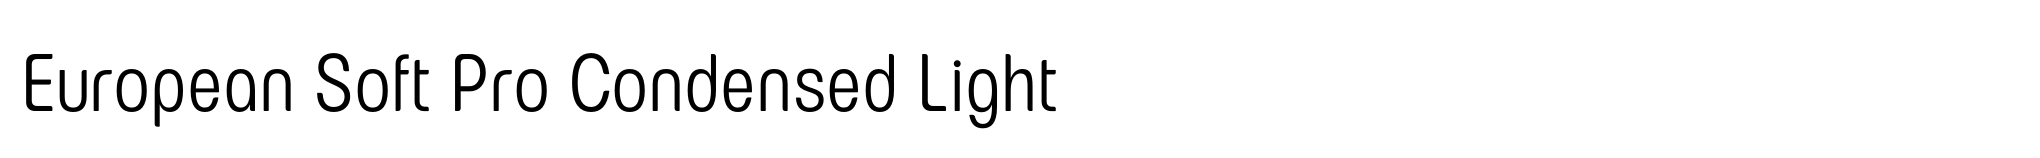 European Soft Pro Condensed Light image